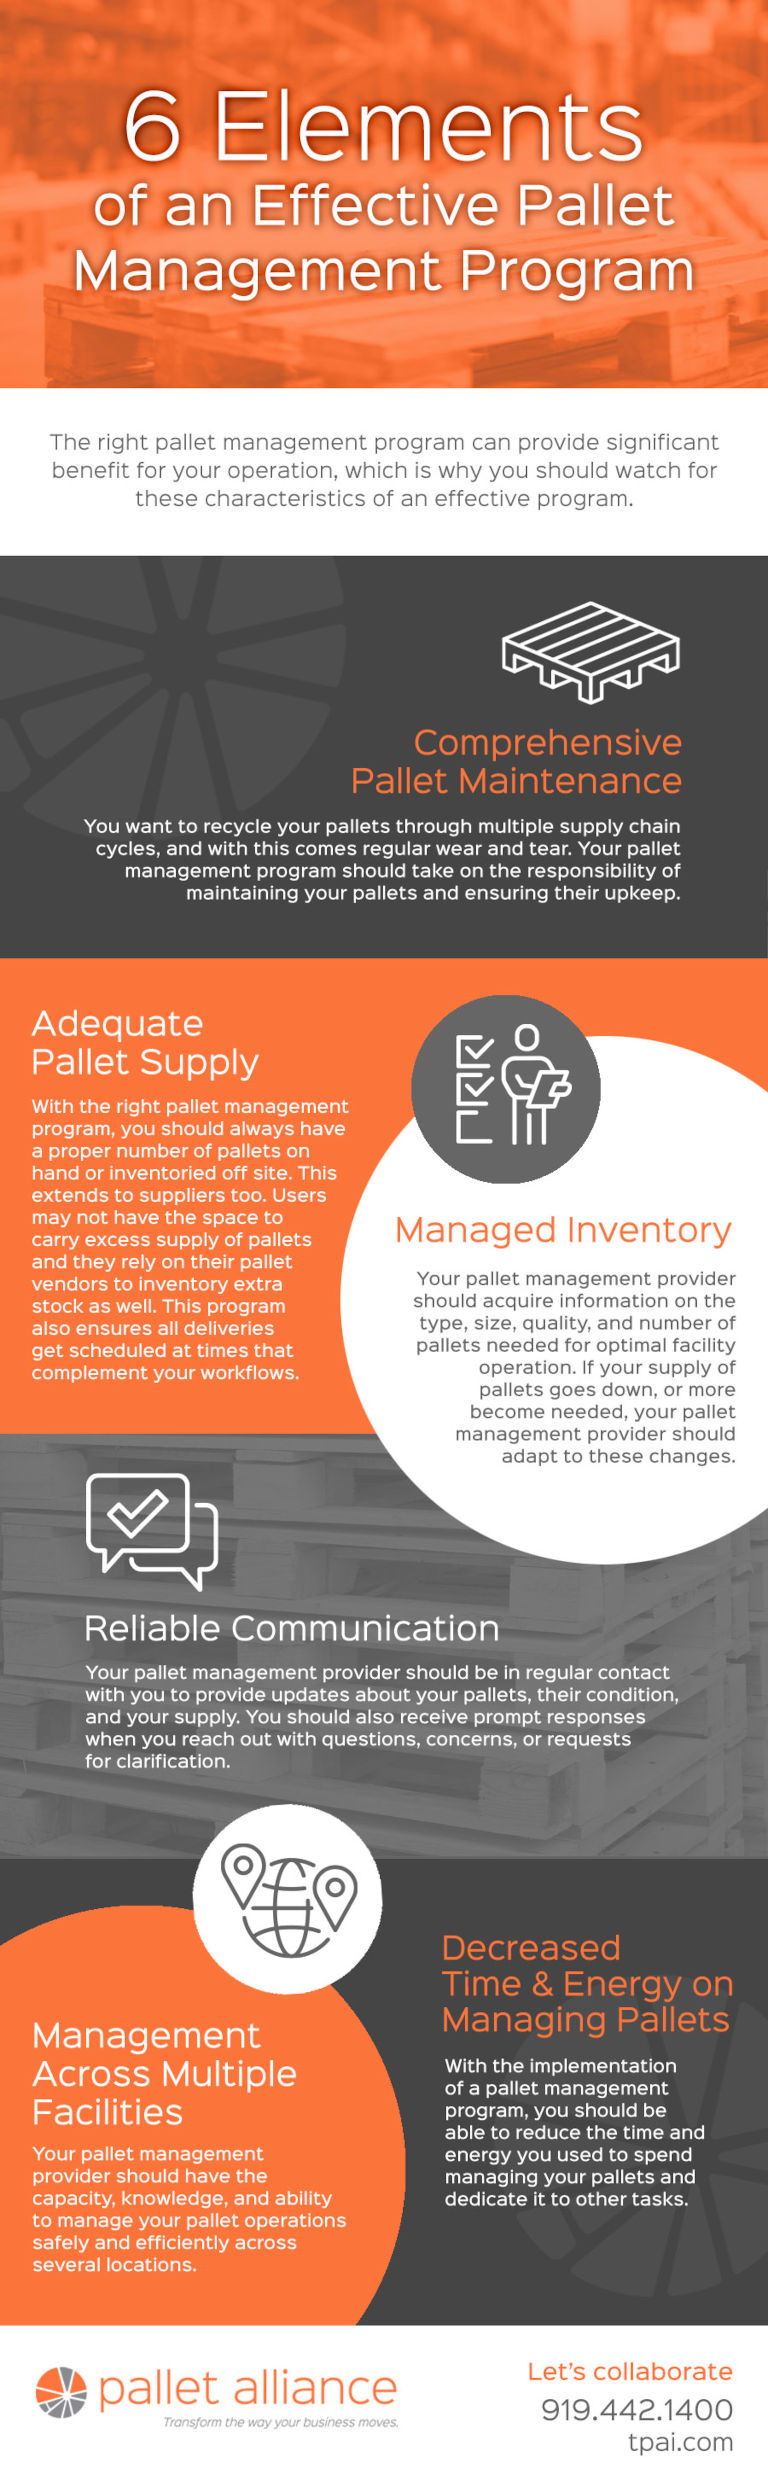 6 Elements of an Effective Pallet Management Program [infographic]